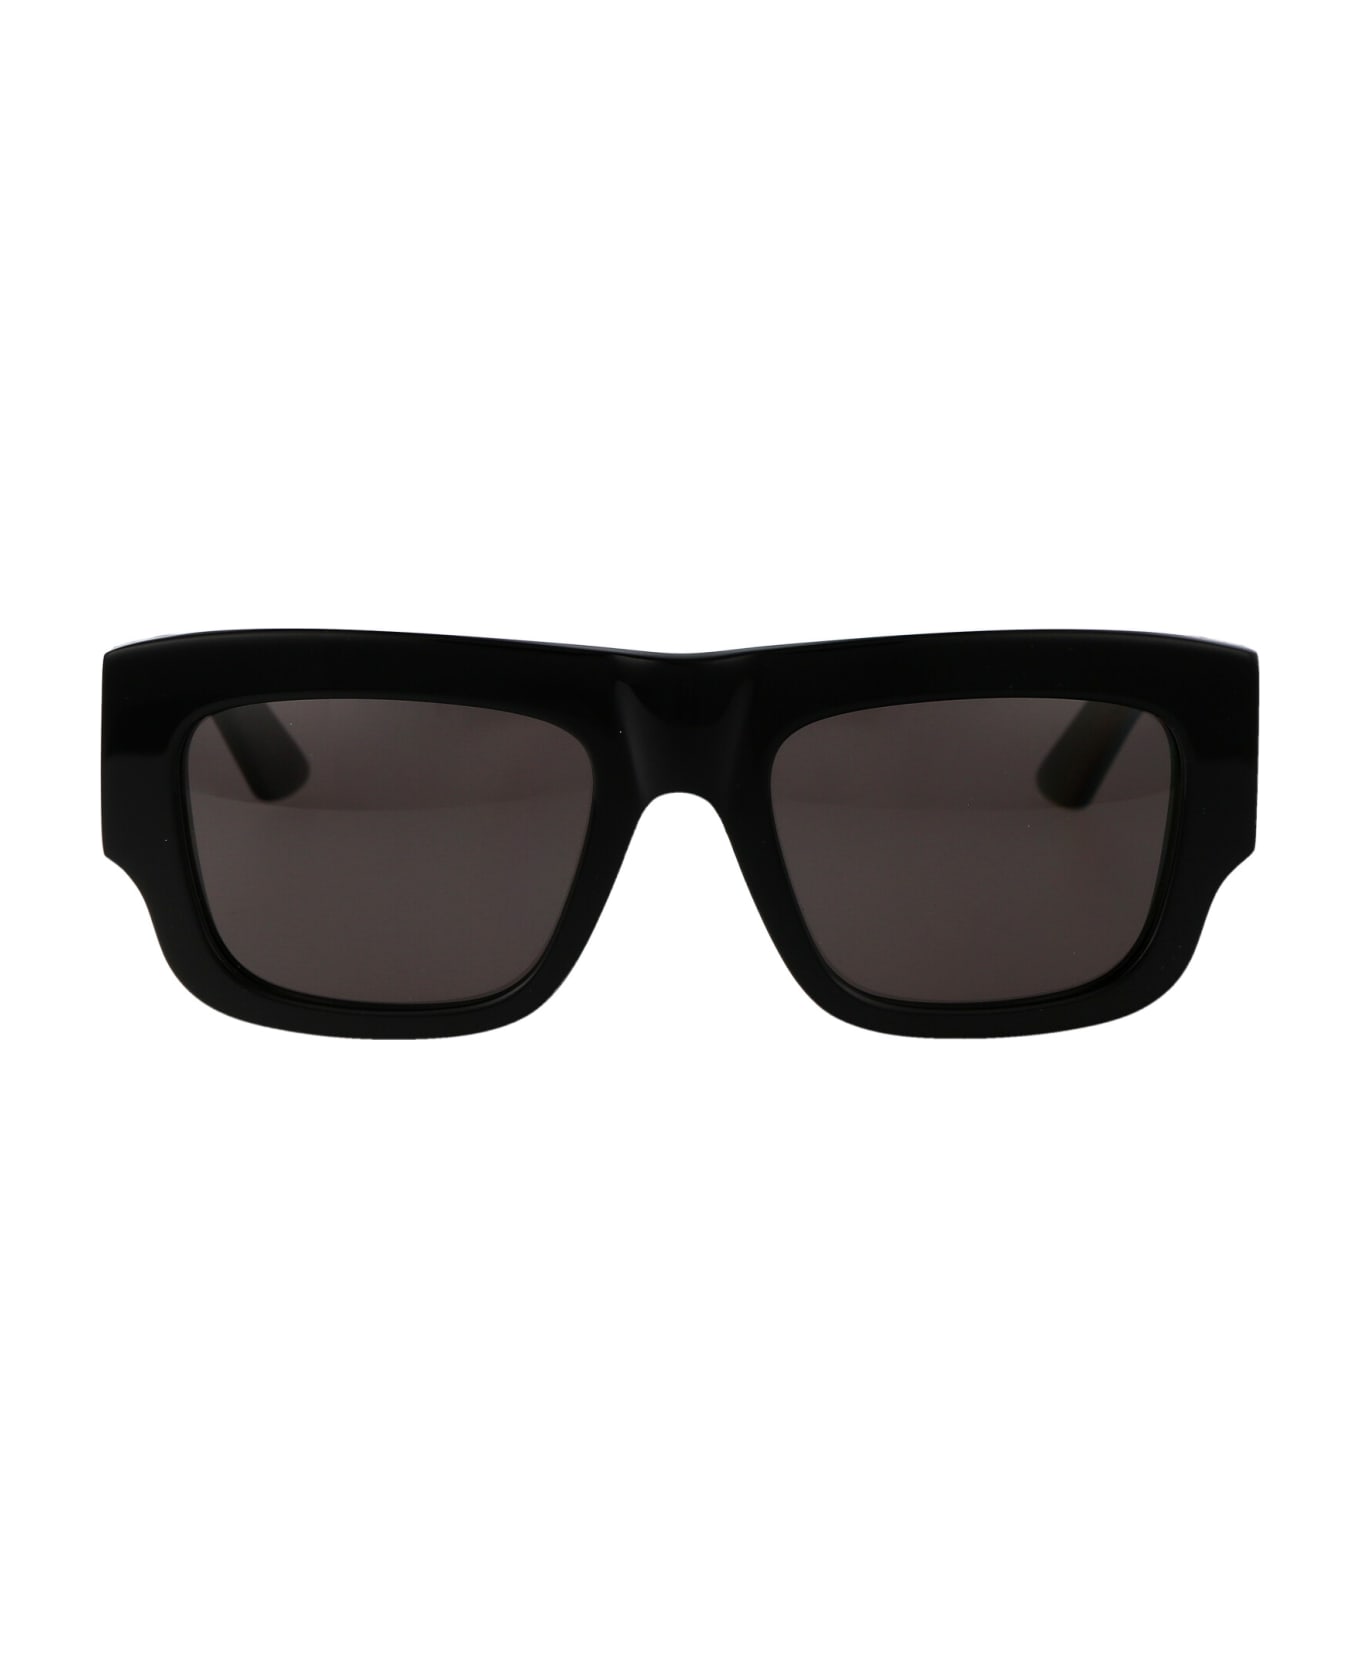 Alexander McQueen Eyewear Am0449s Sunglasses - 001 BLACK BLACK GREY